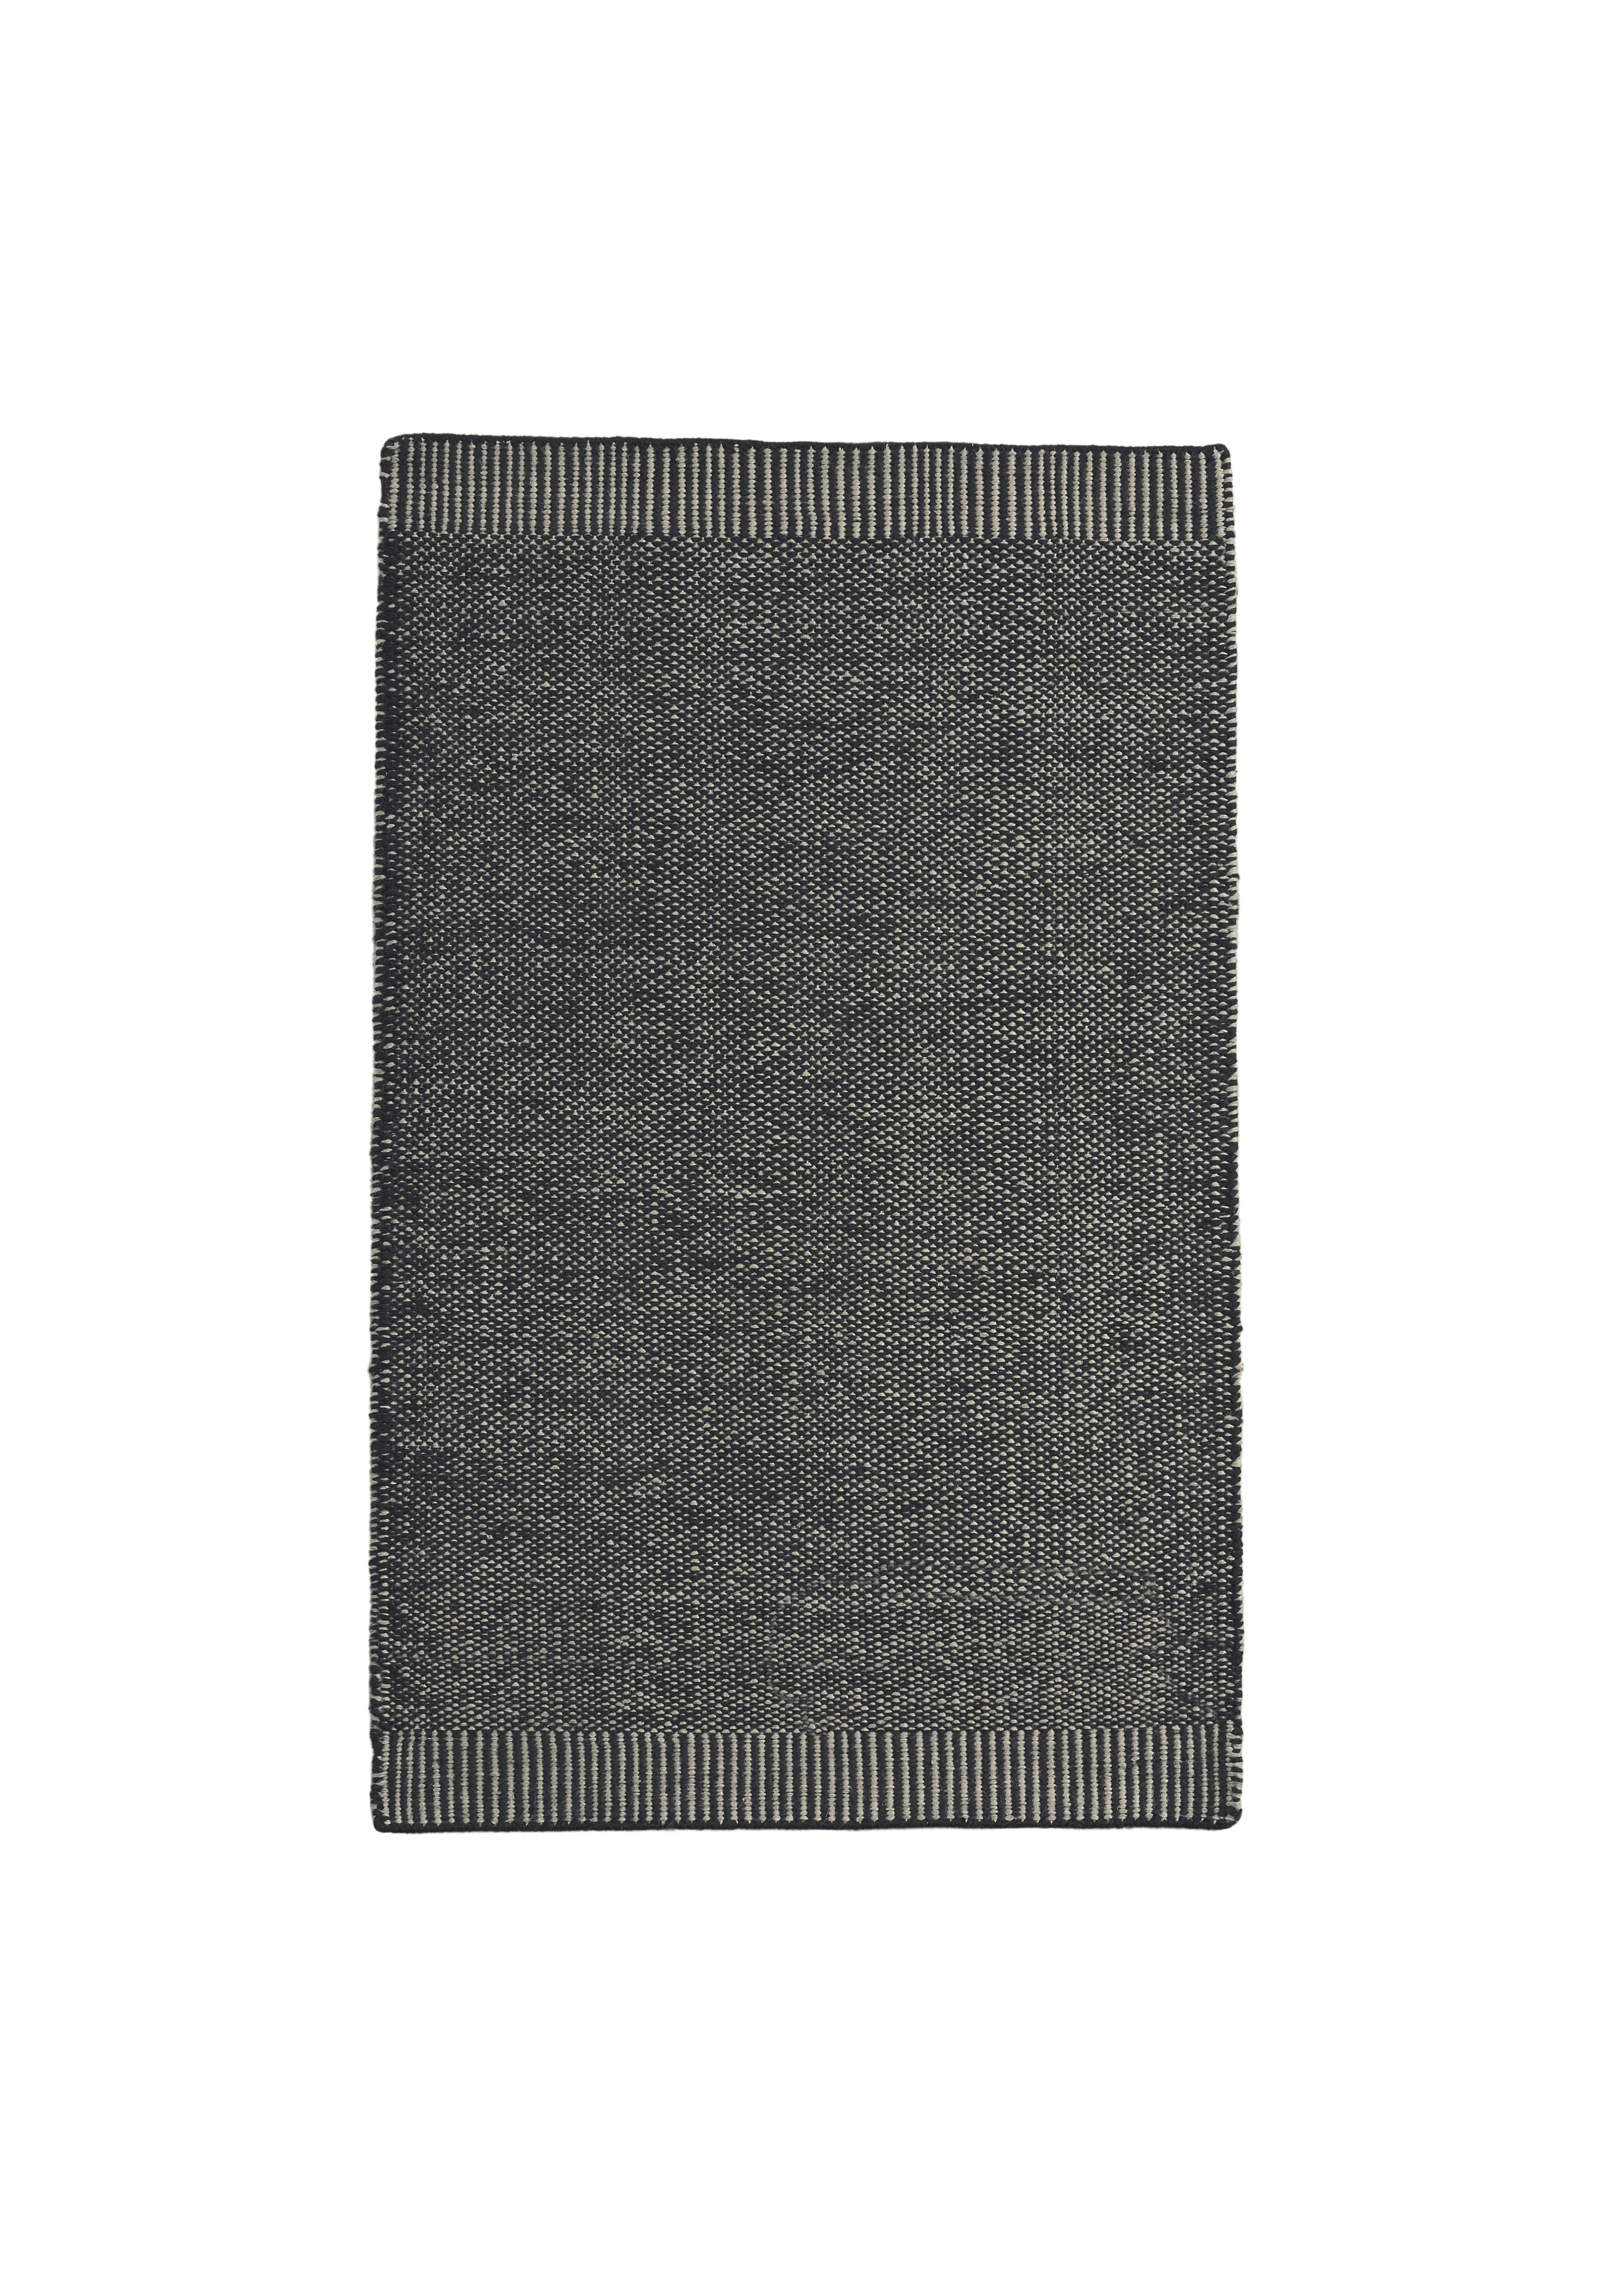 WOUD Rombo gulvtæppe, rektangulær - grå uld og jute (140x90)